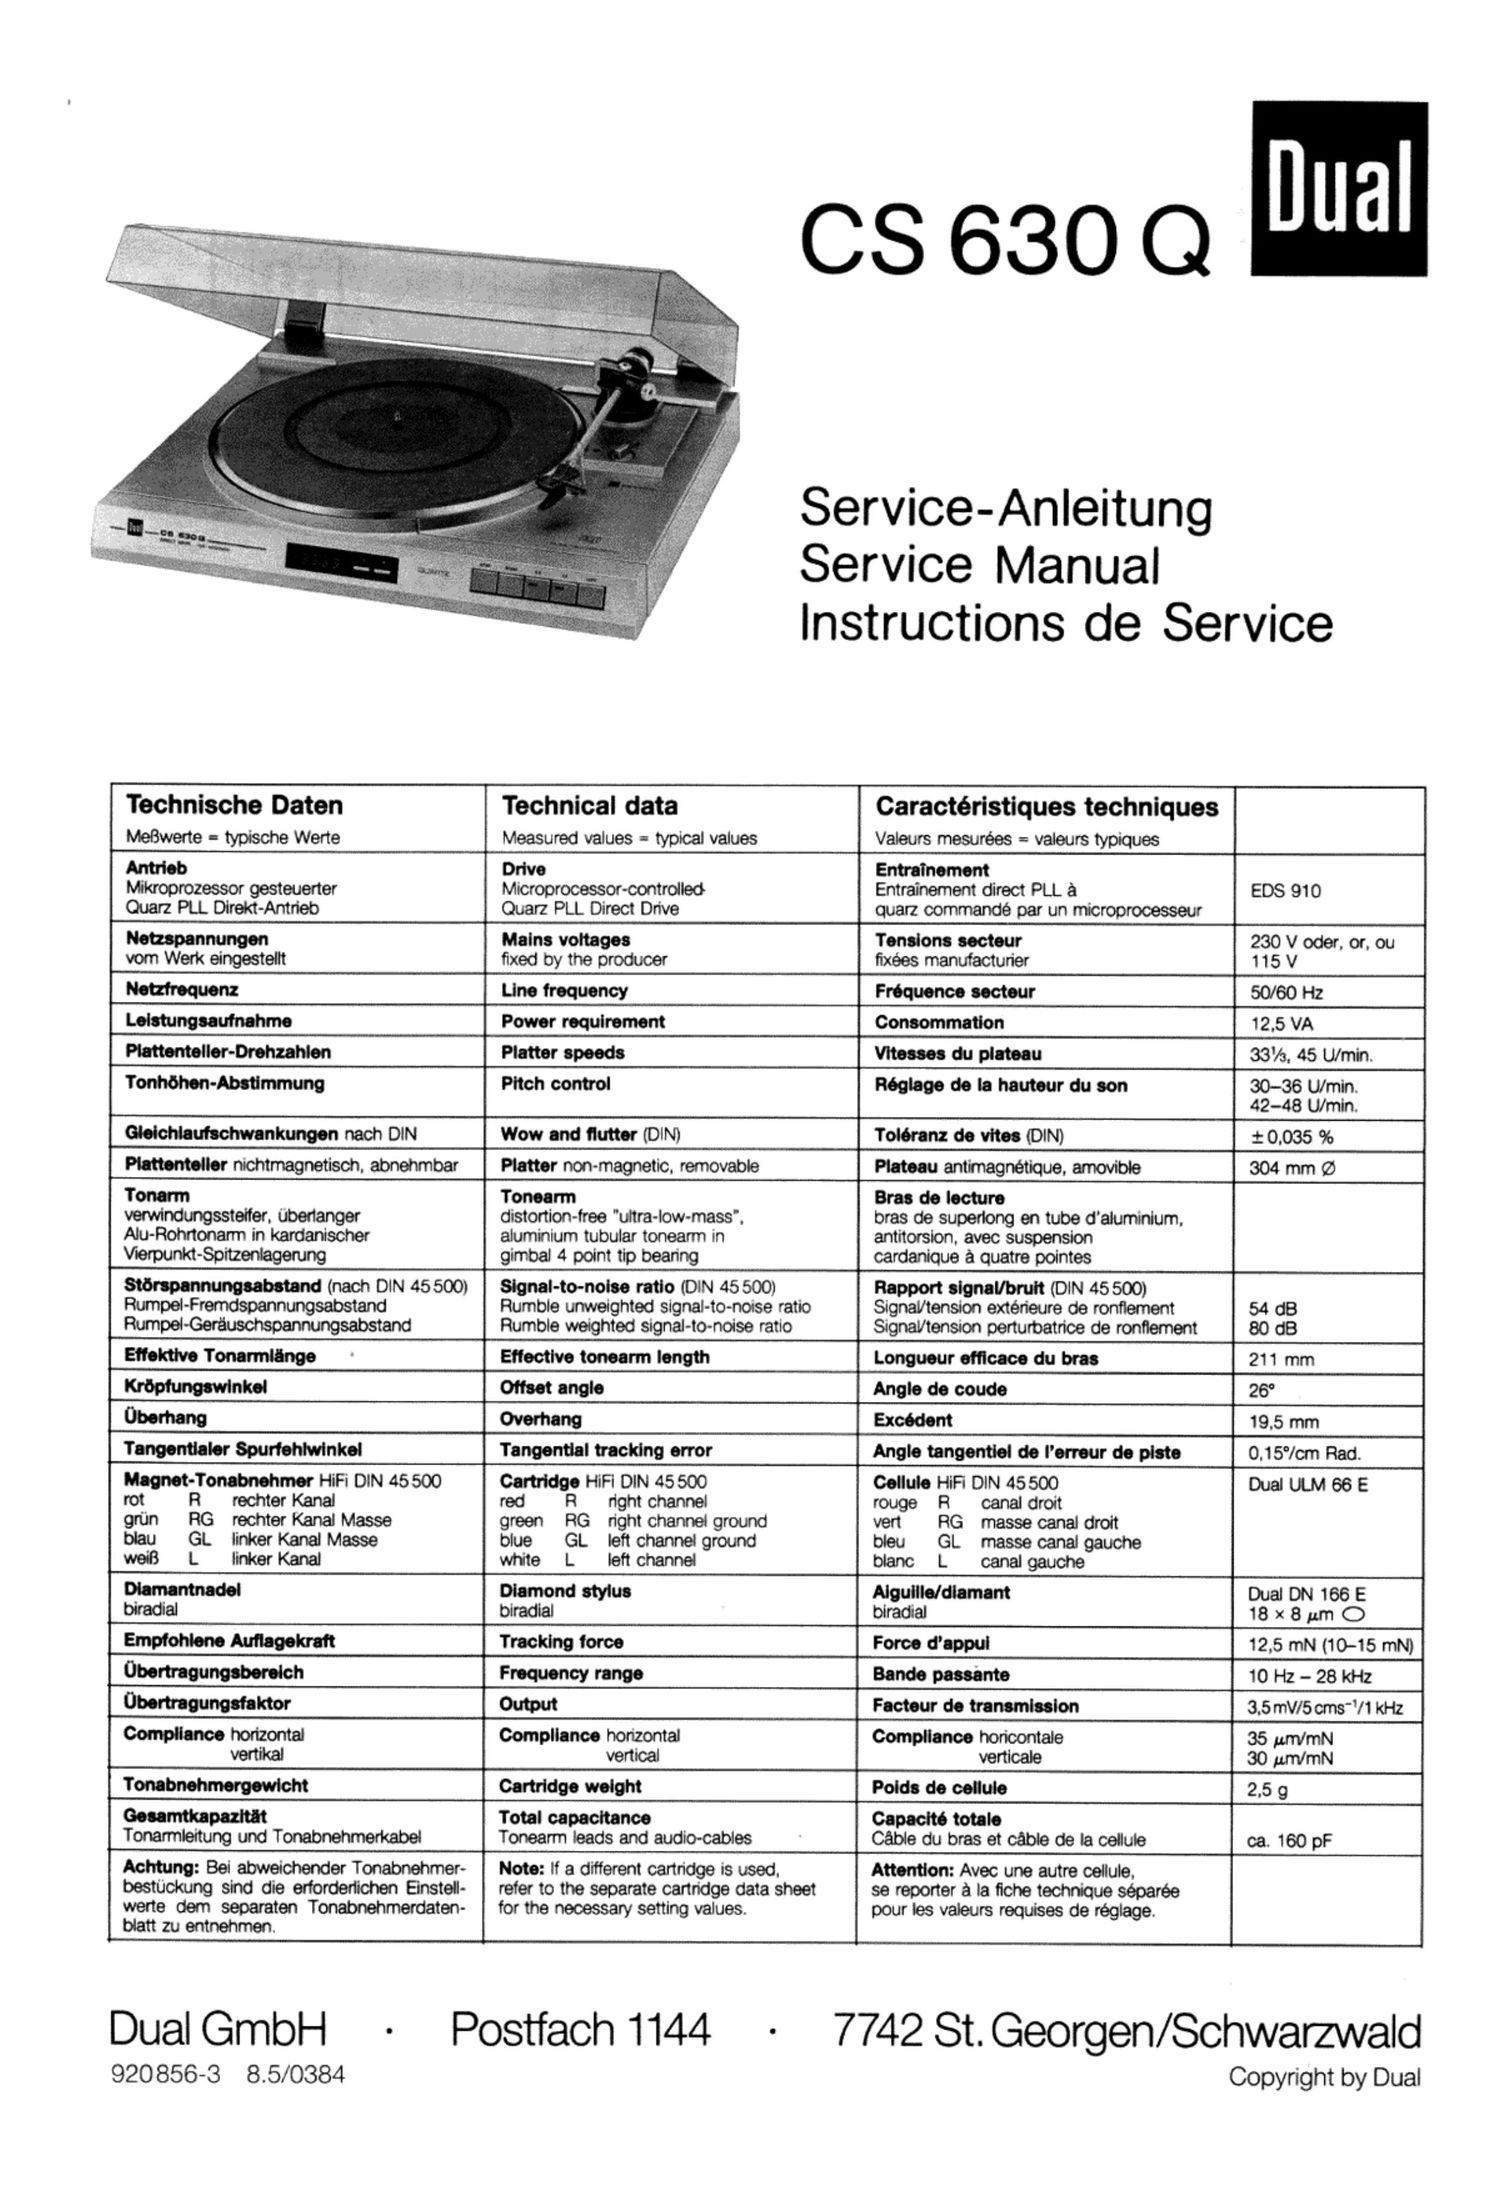 Free Download Dual Cs 630 Q Service Manual